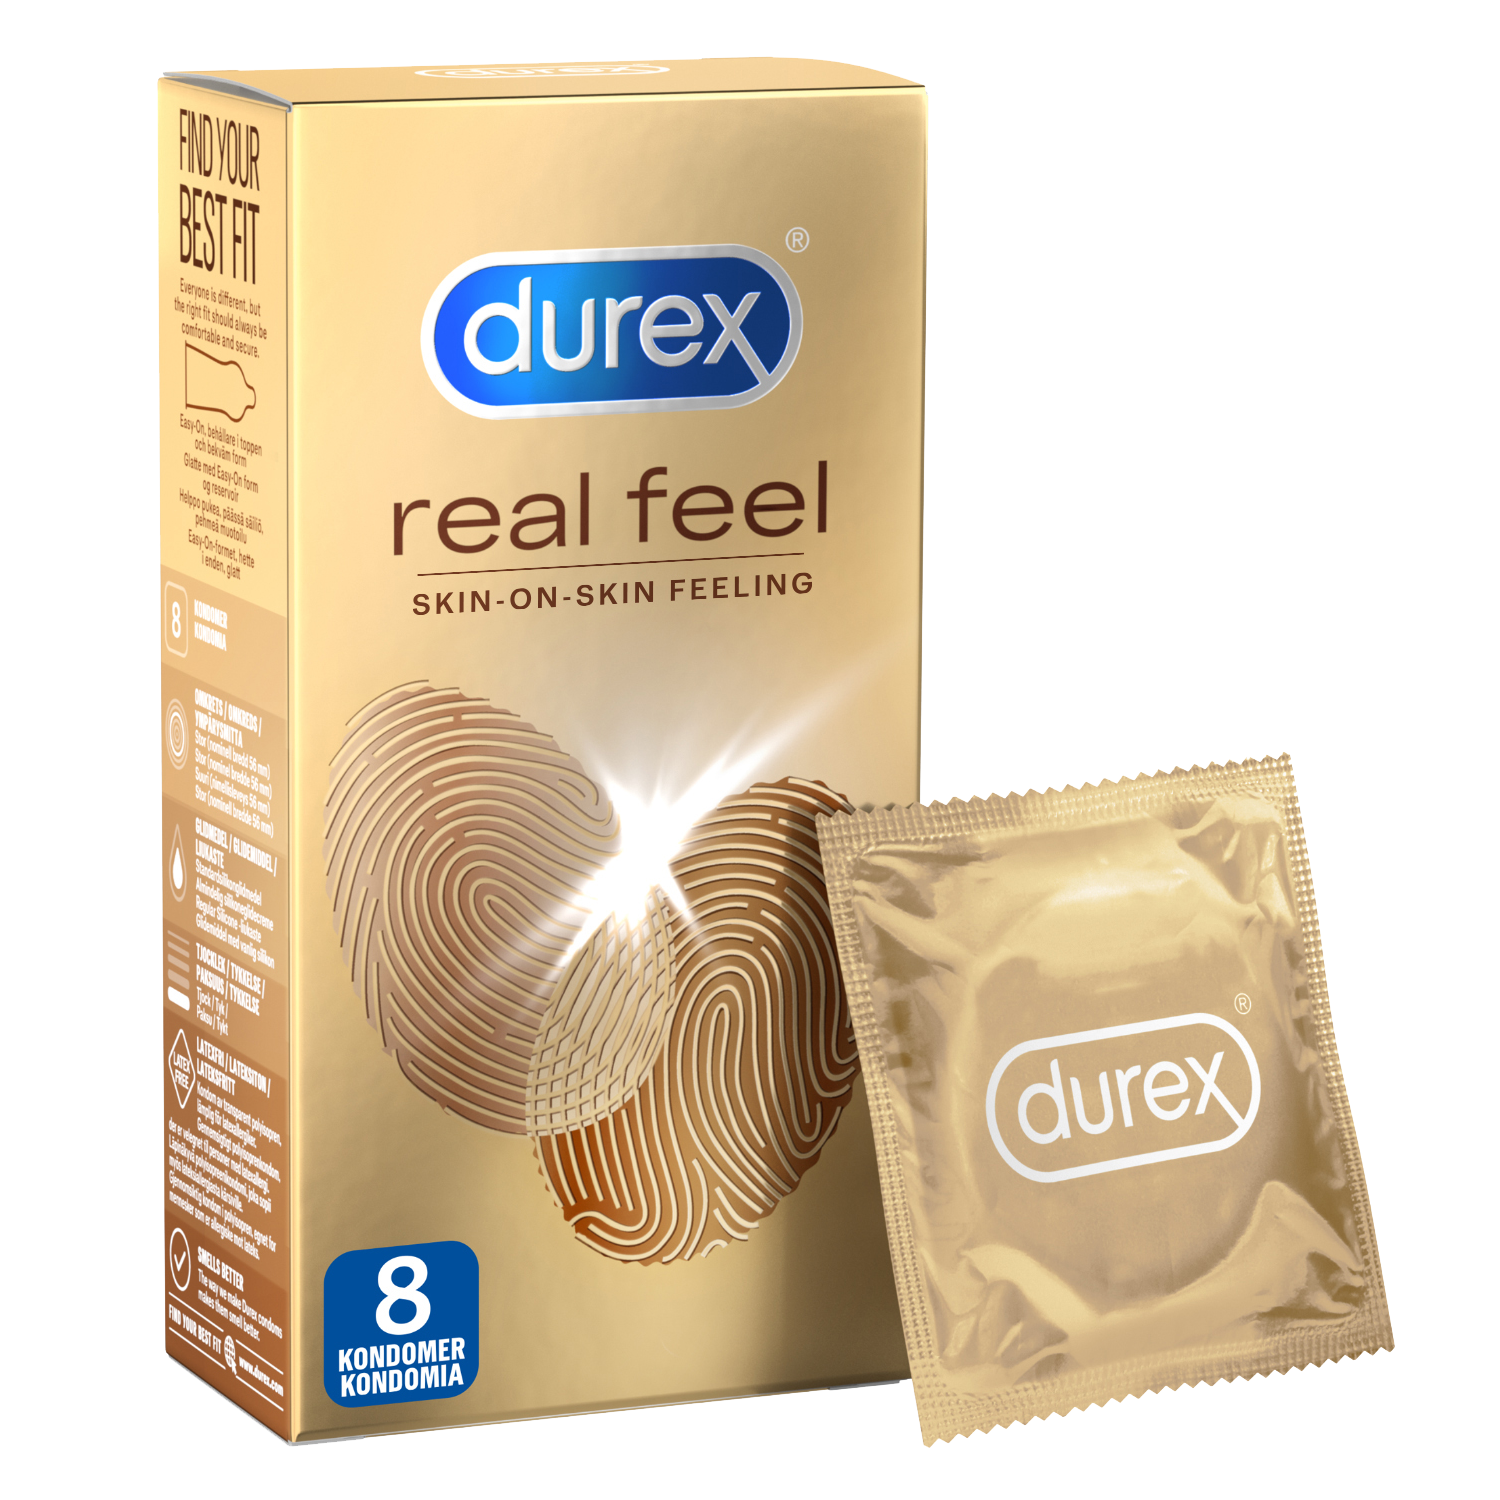 Durex Real Feel Skin-On-Skin Feeling 8 st